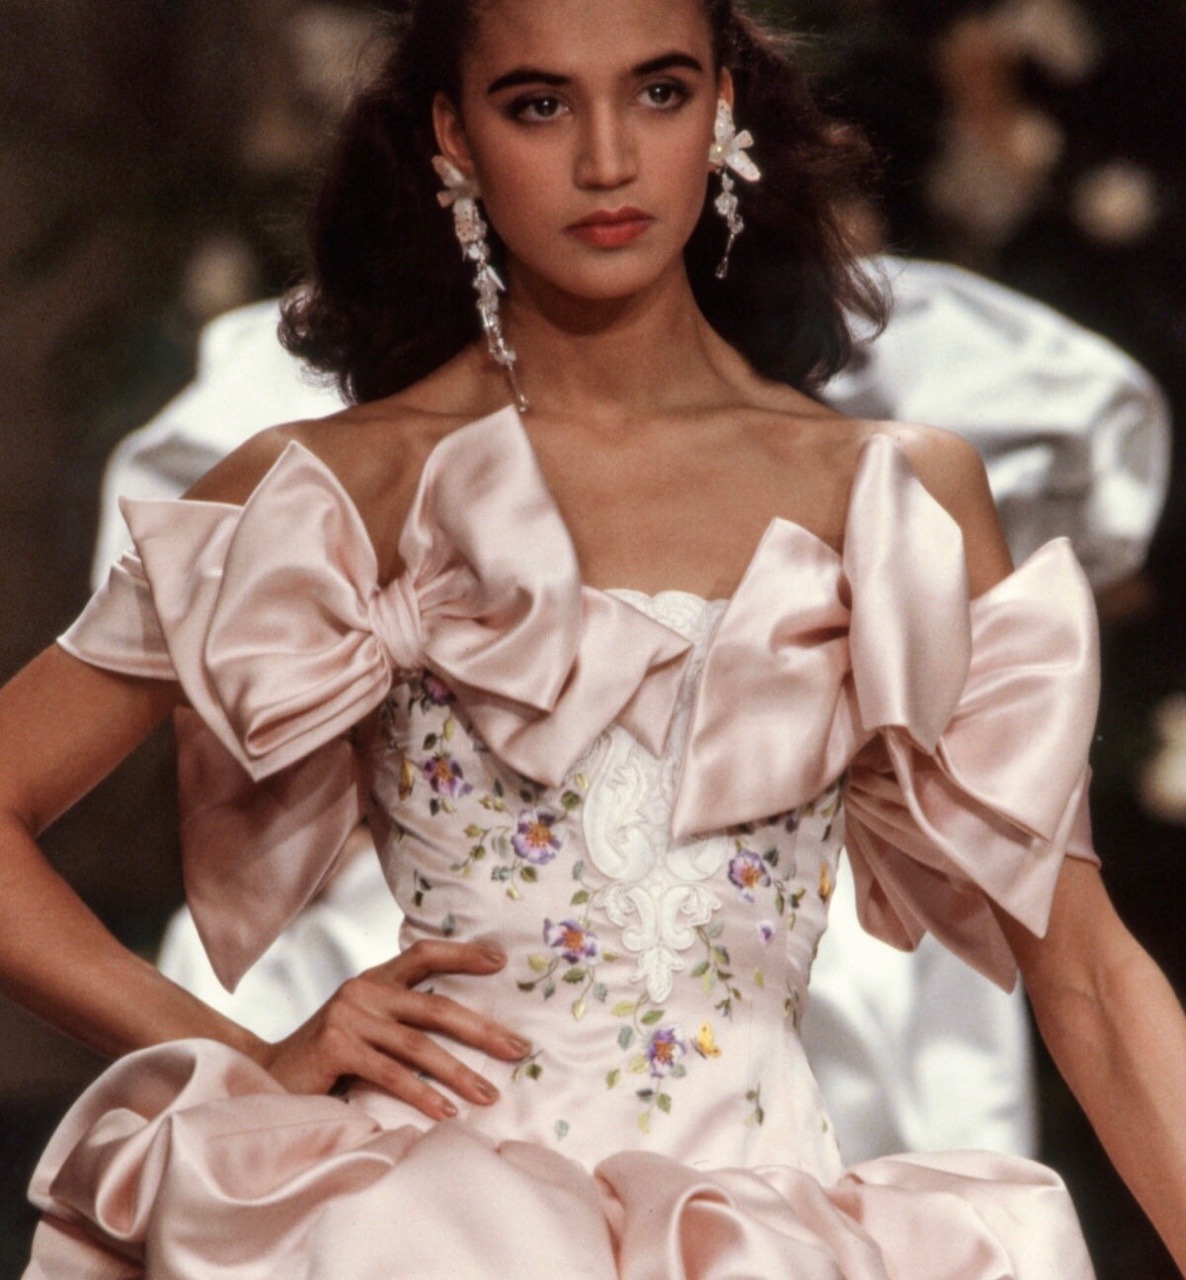 the original supermodels — Jean-Louis Scherrer - Fall 1992 Couture